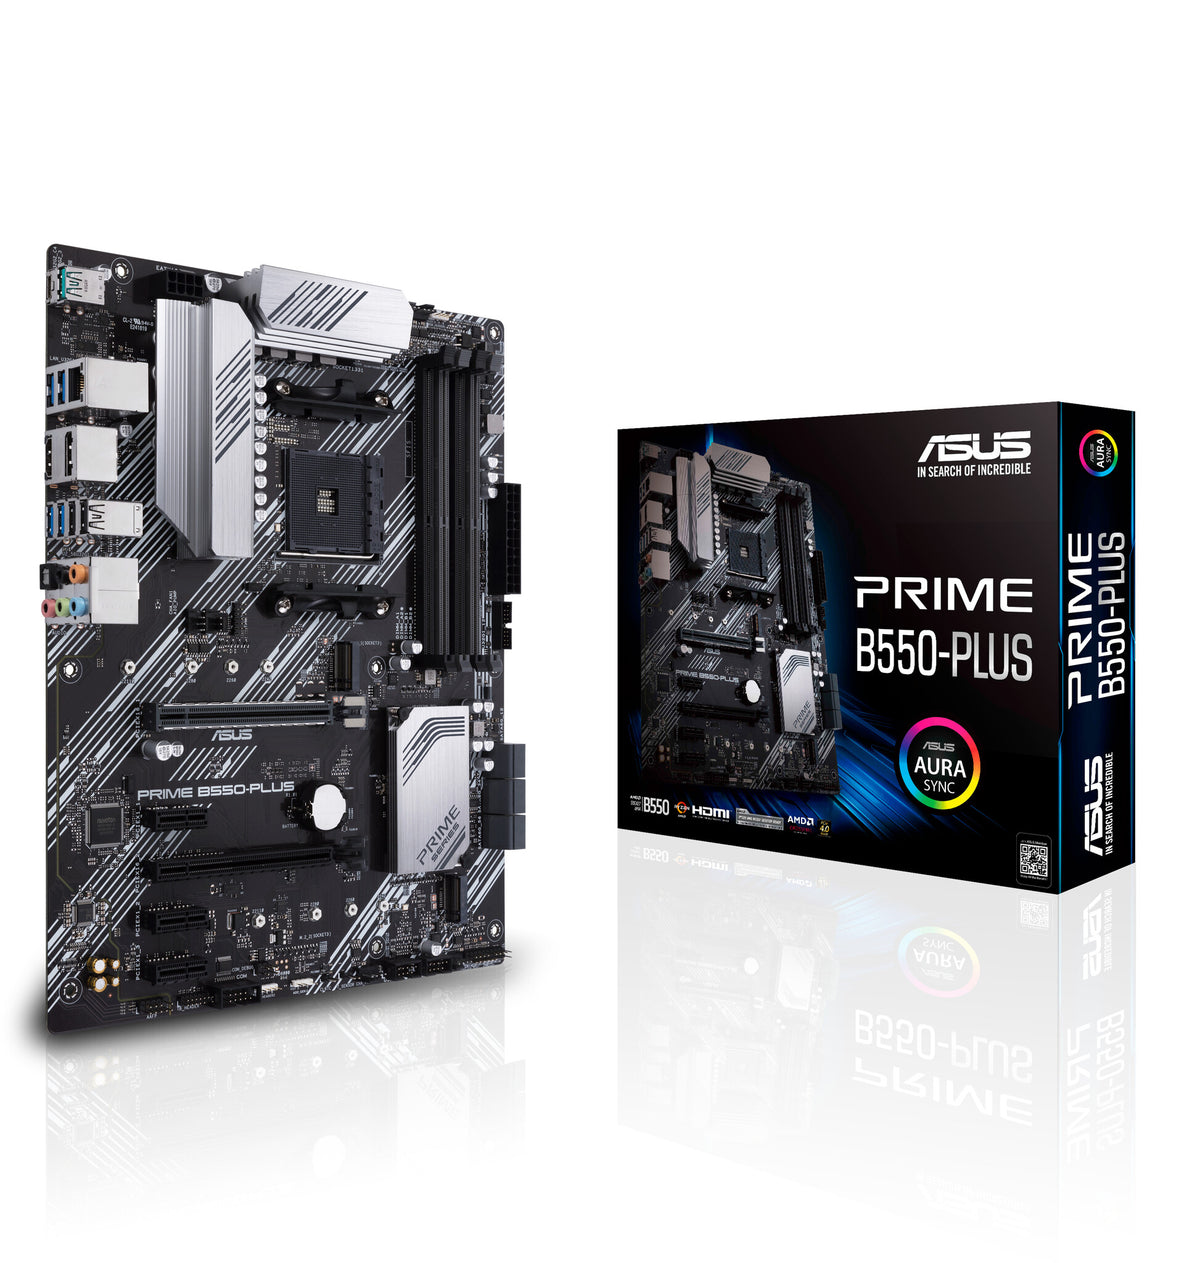 ASUS PRIME B550-PLUS ATX motherboard - AMD B550 Socket AM4